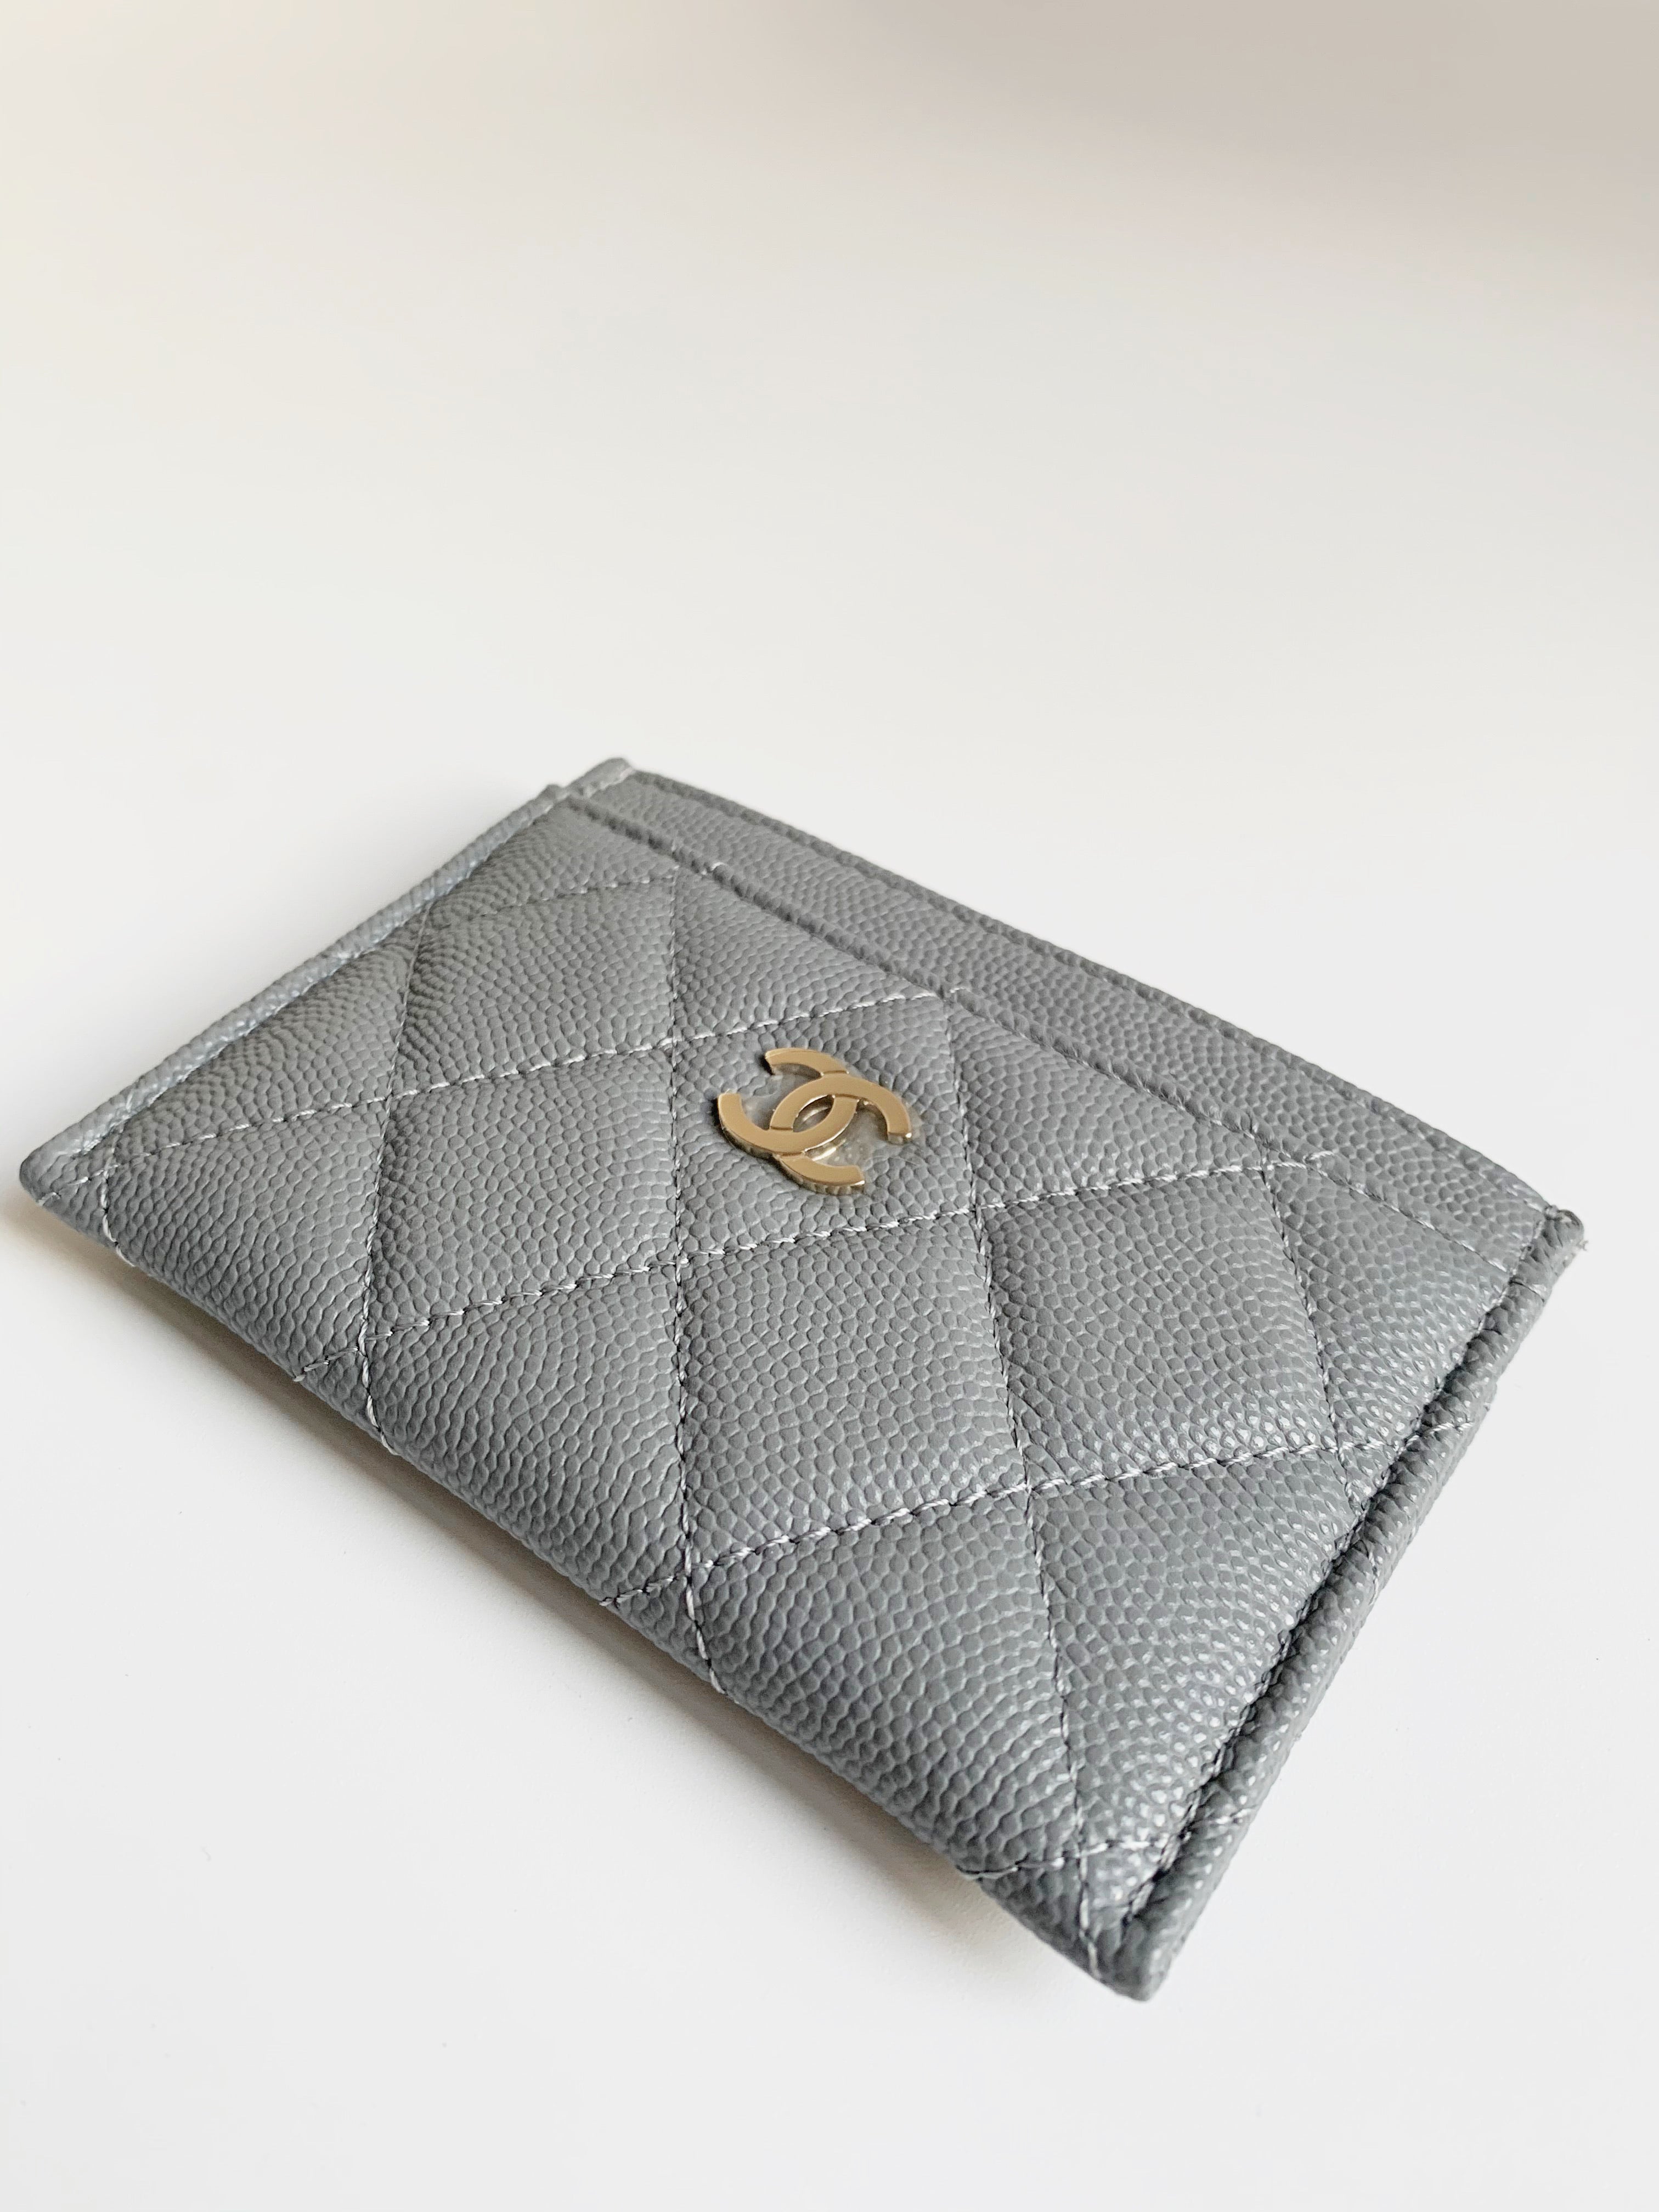 Chanel Card Holder Wallet Black Caviar Crystal and Light Gold Hardware